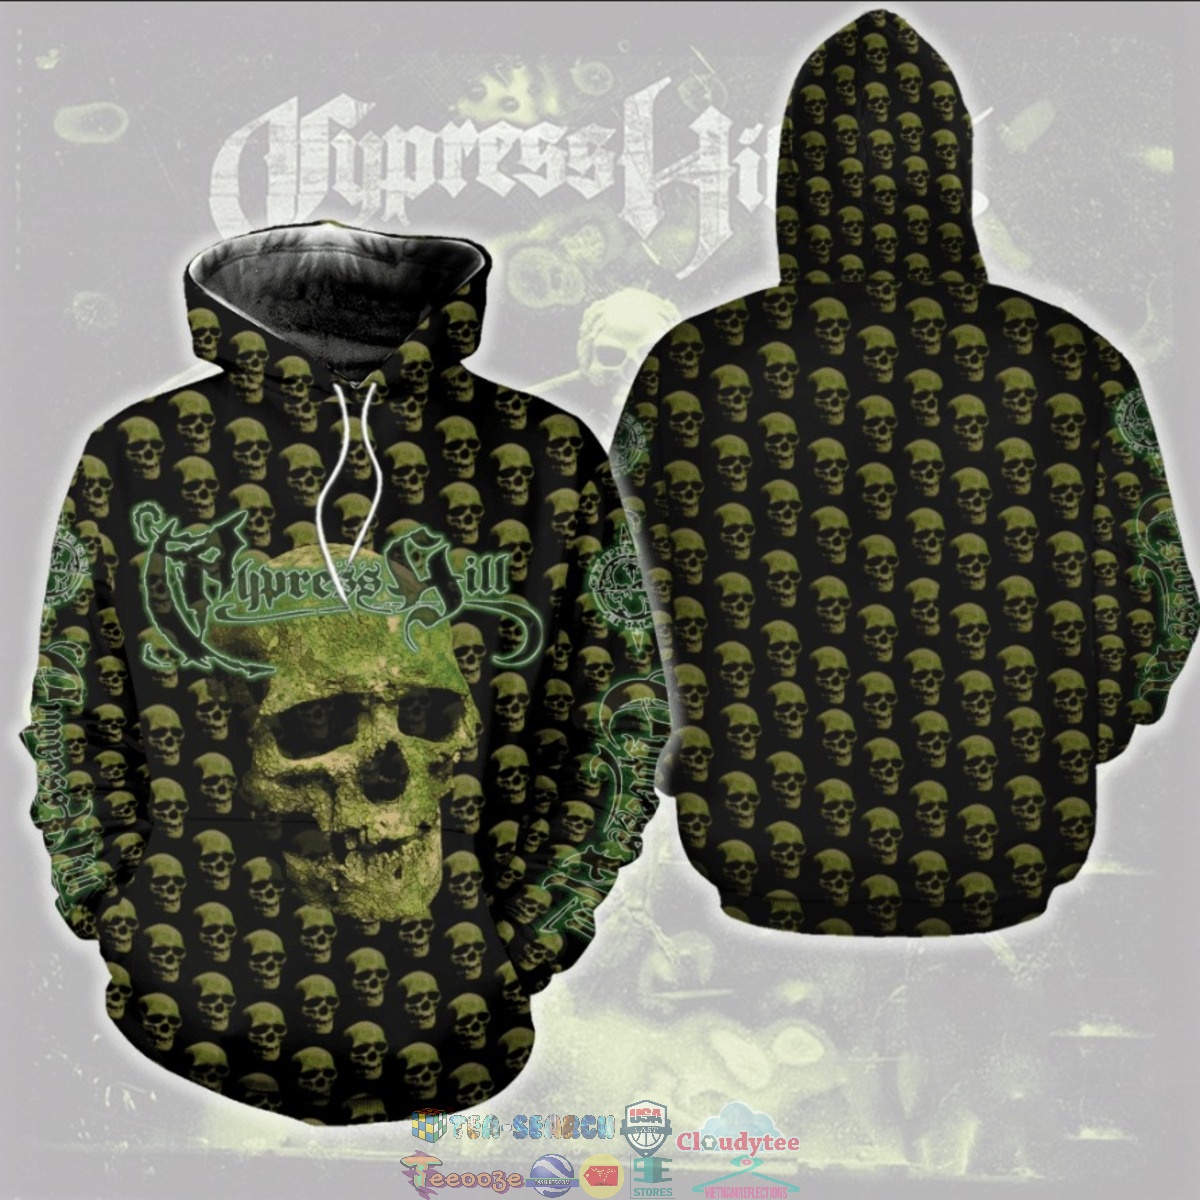 Cypress Hill ver 4 3D hoodie and t-shirt – Saleoff